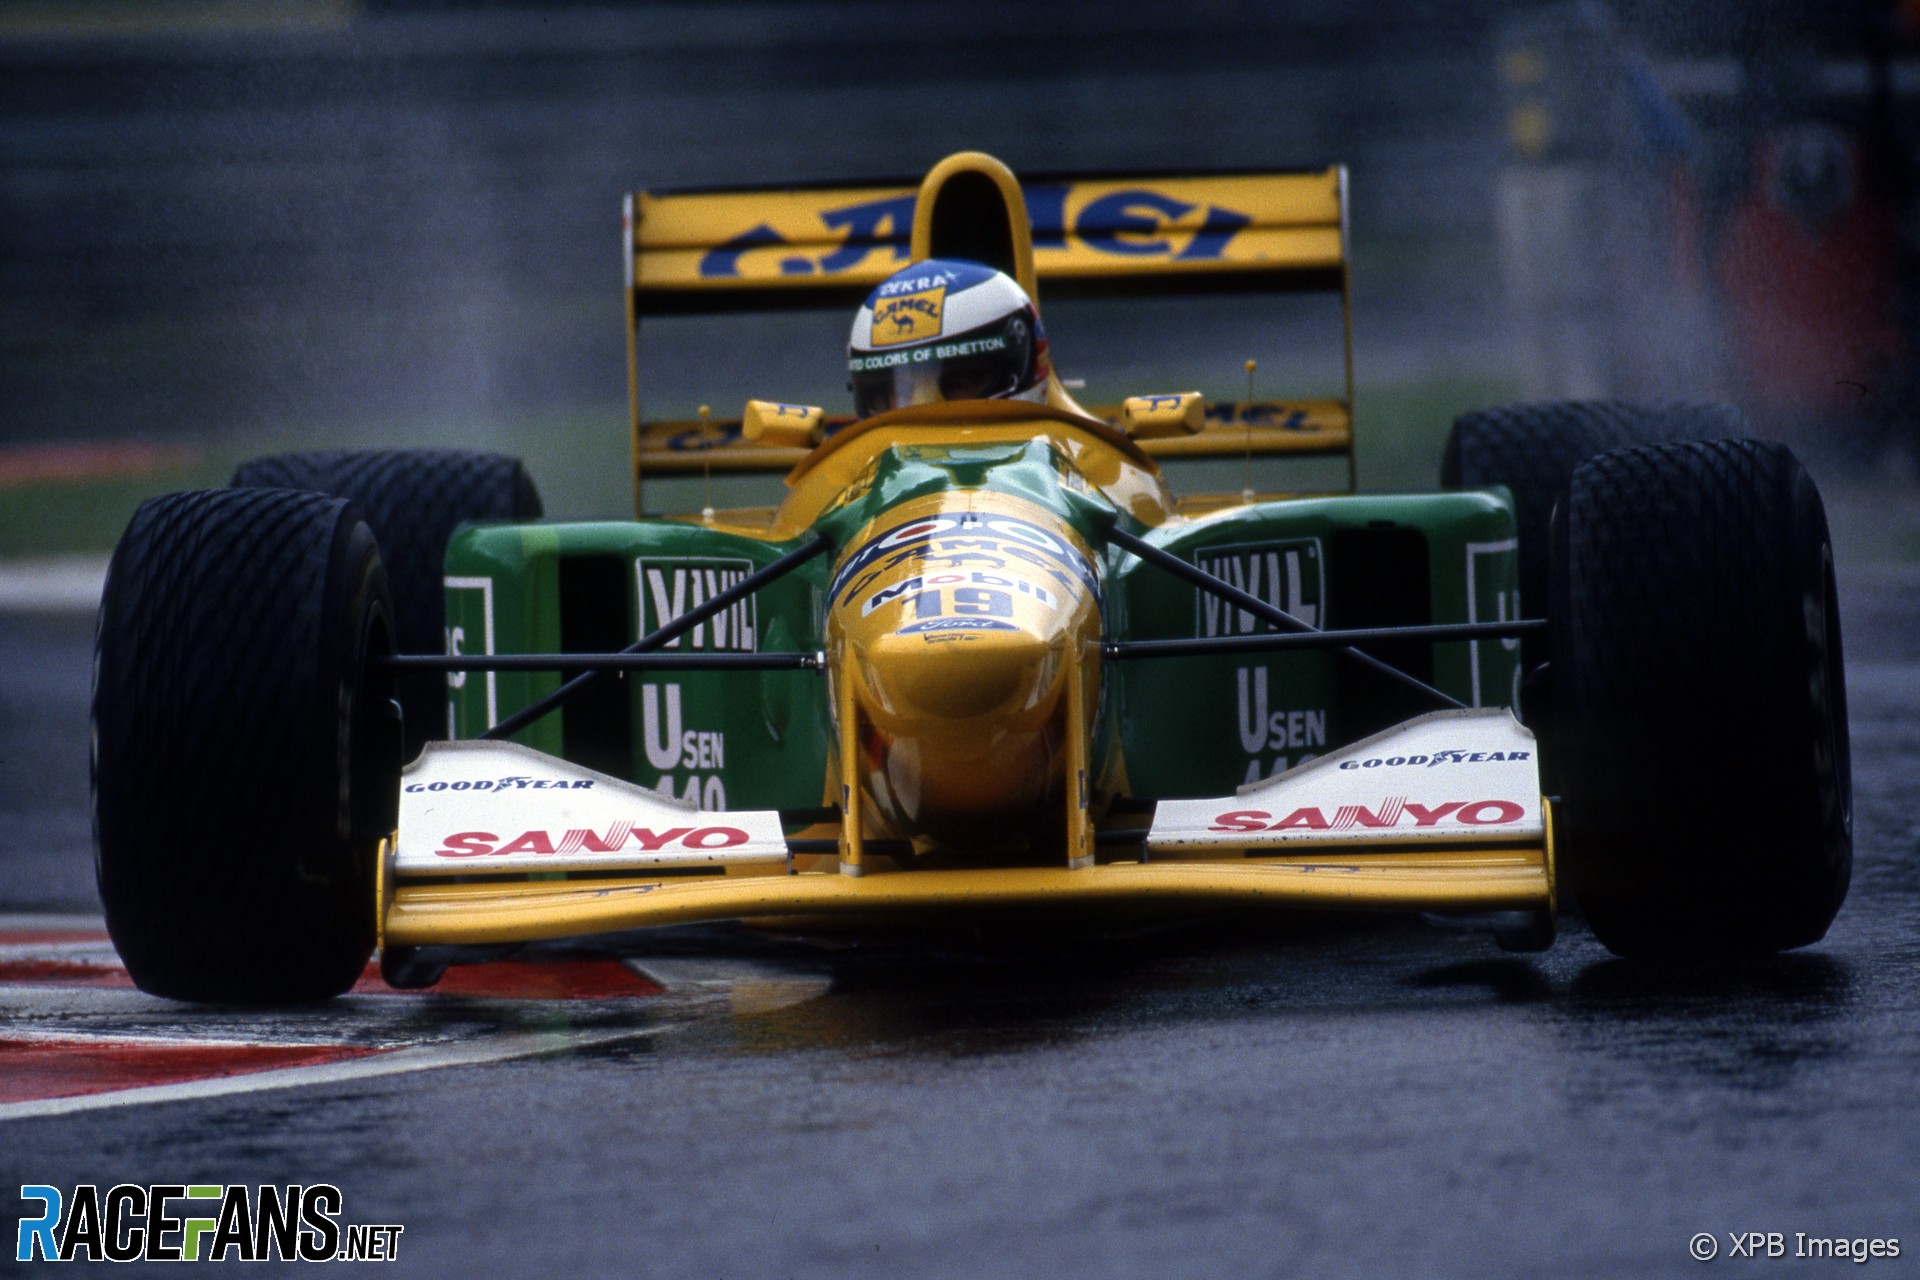 GP da Bélgica de Fórmula 1, Spa-Francorchamps em 1992 - by racefans.com 